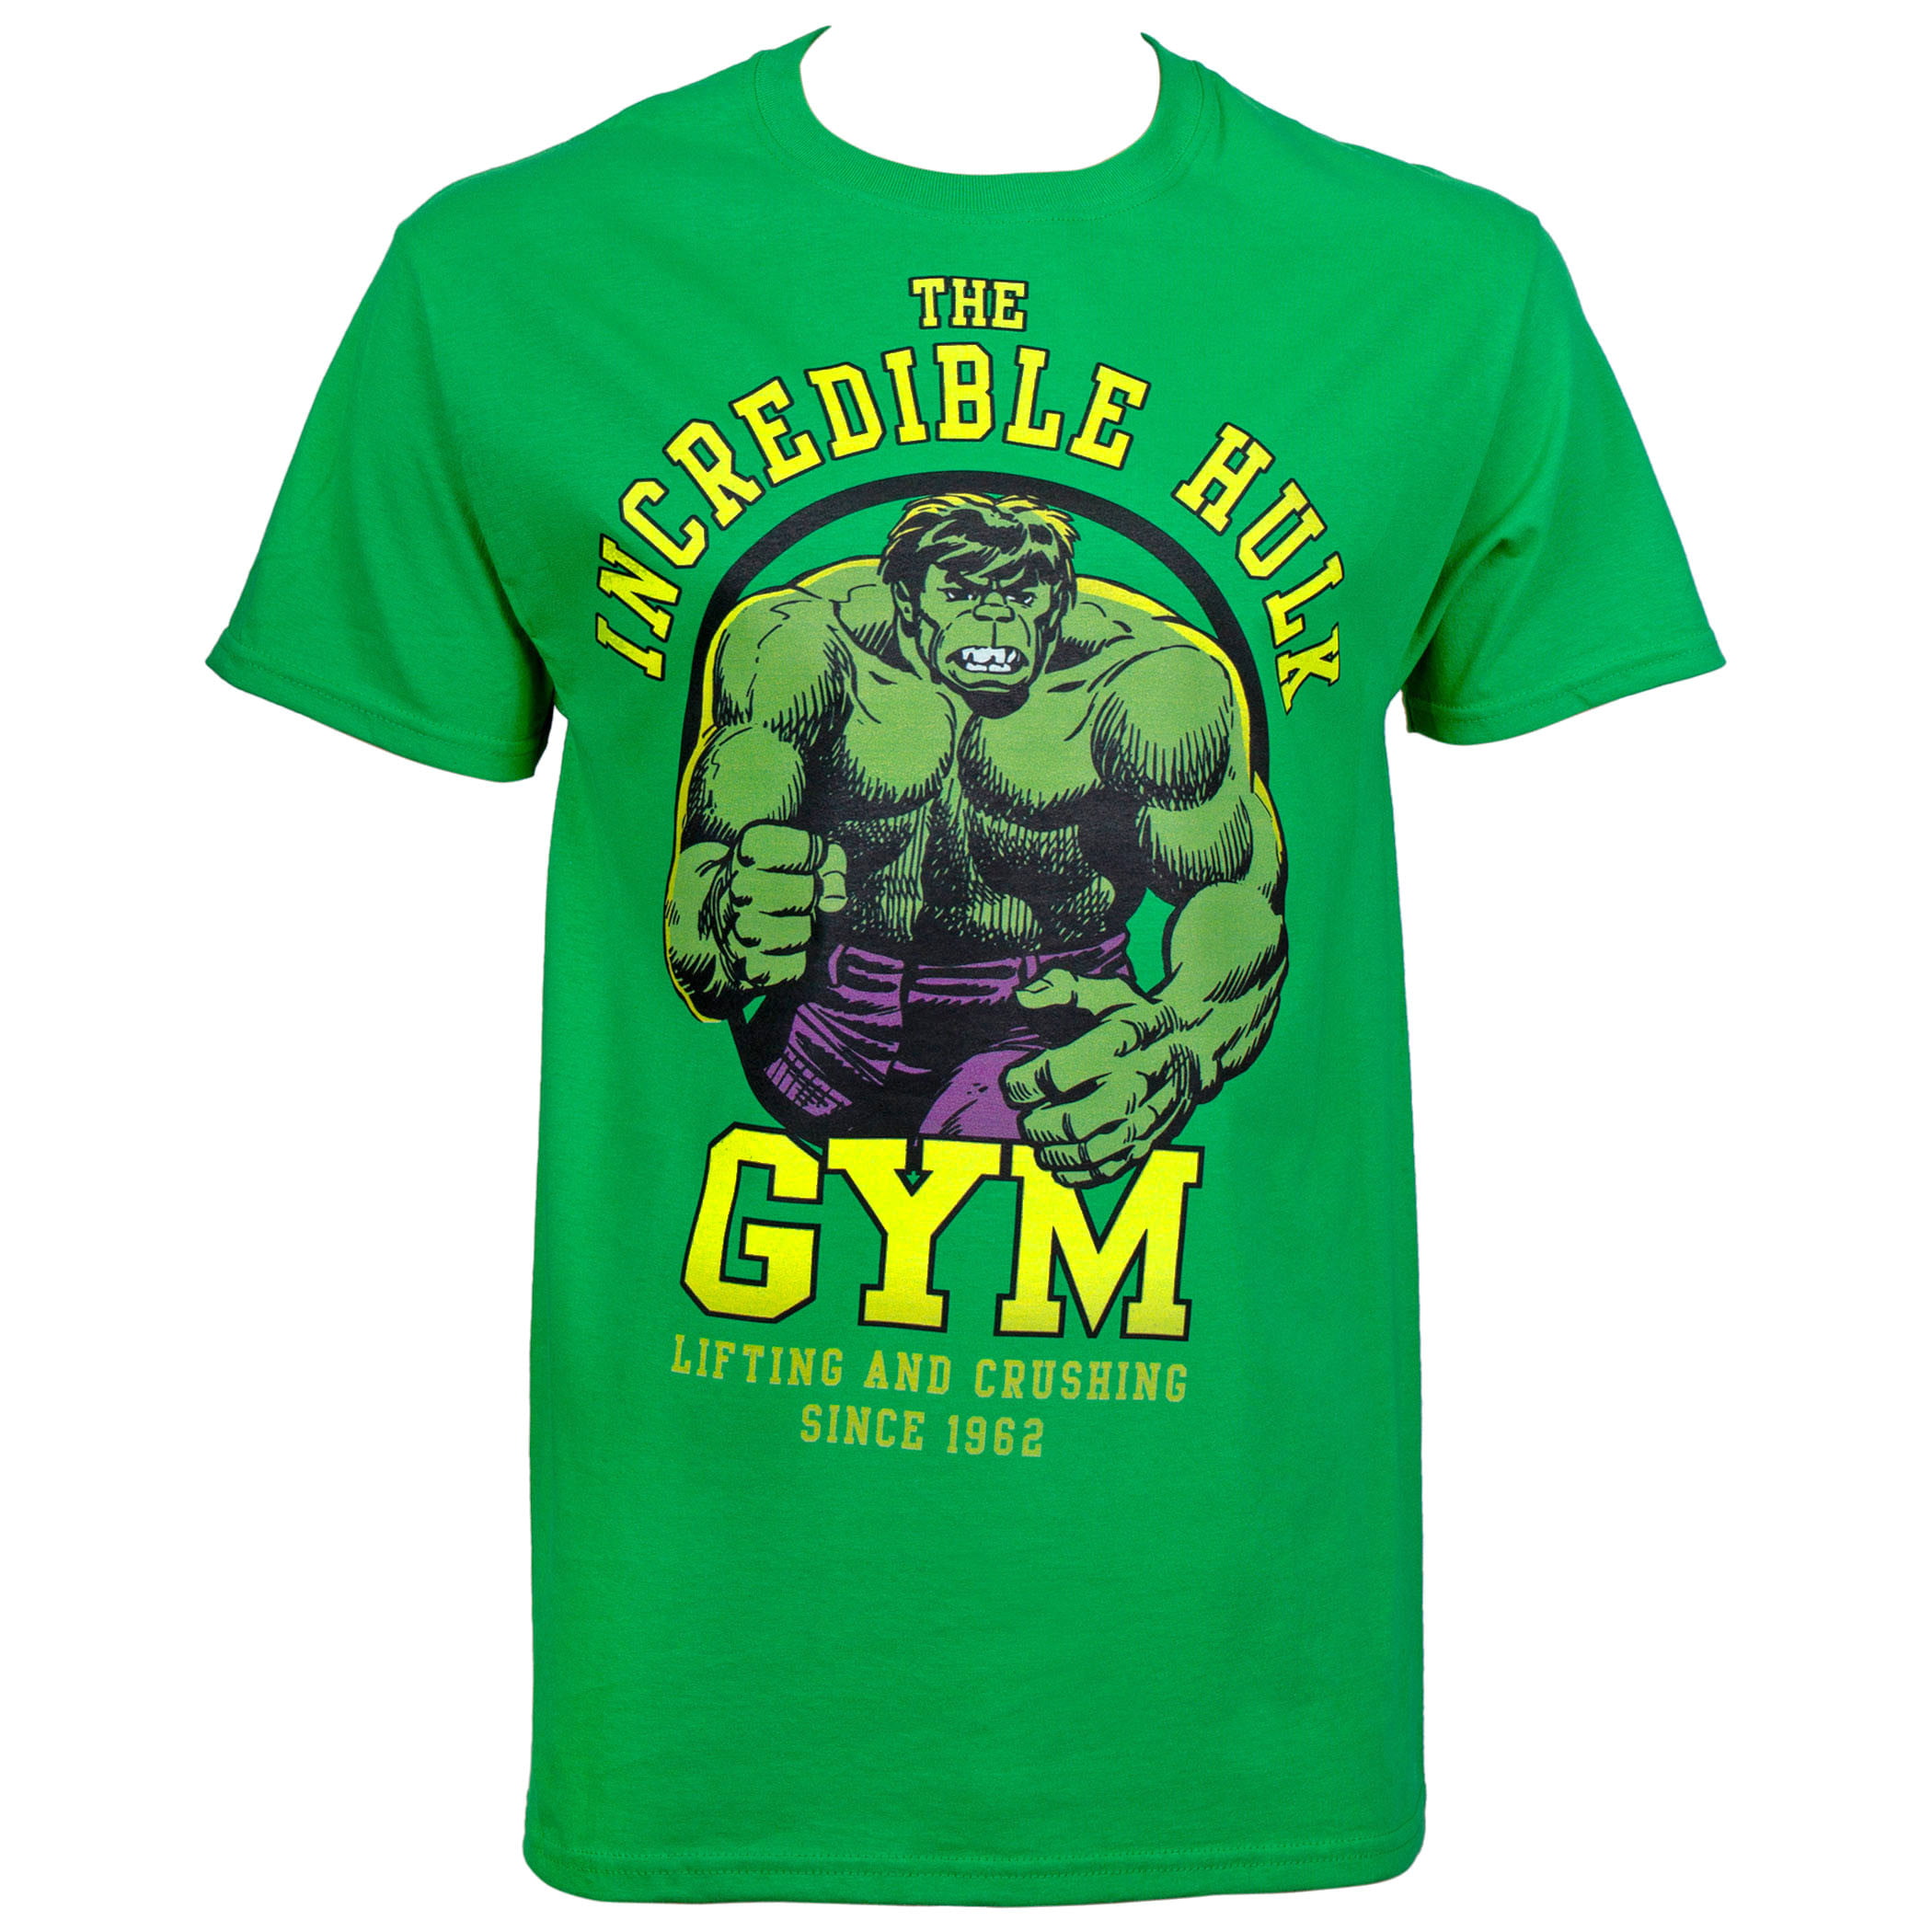 Sizes S-XXL Marvel Hulk Text Men's T-Shirt Official